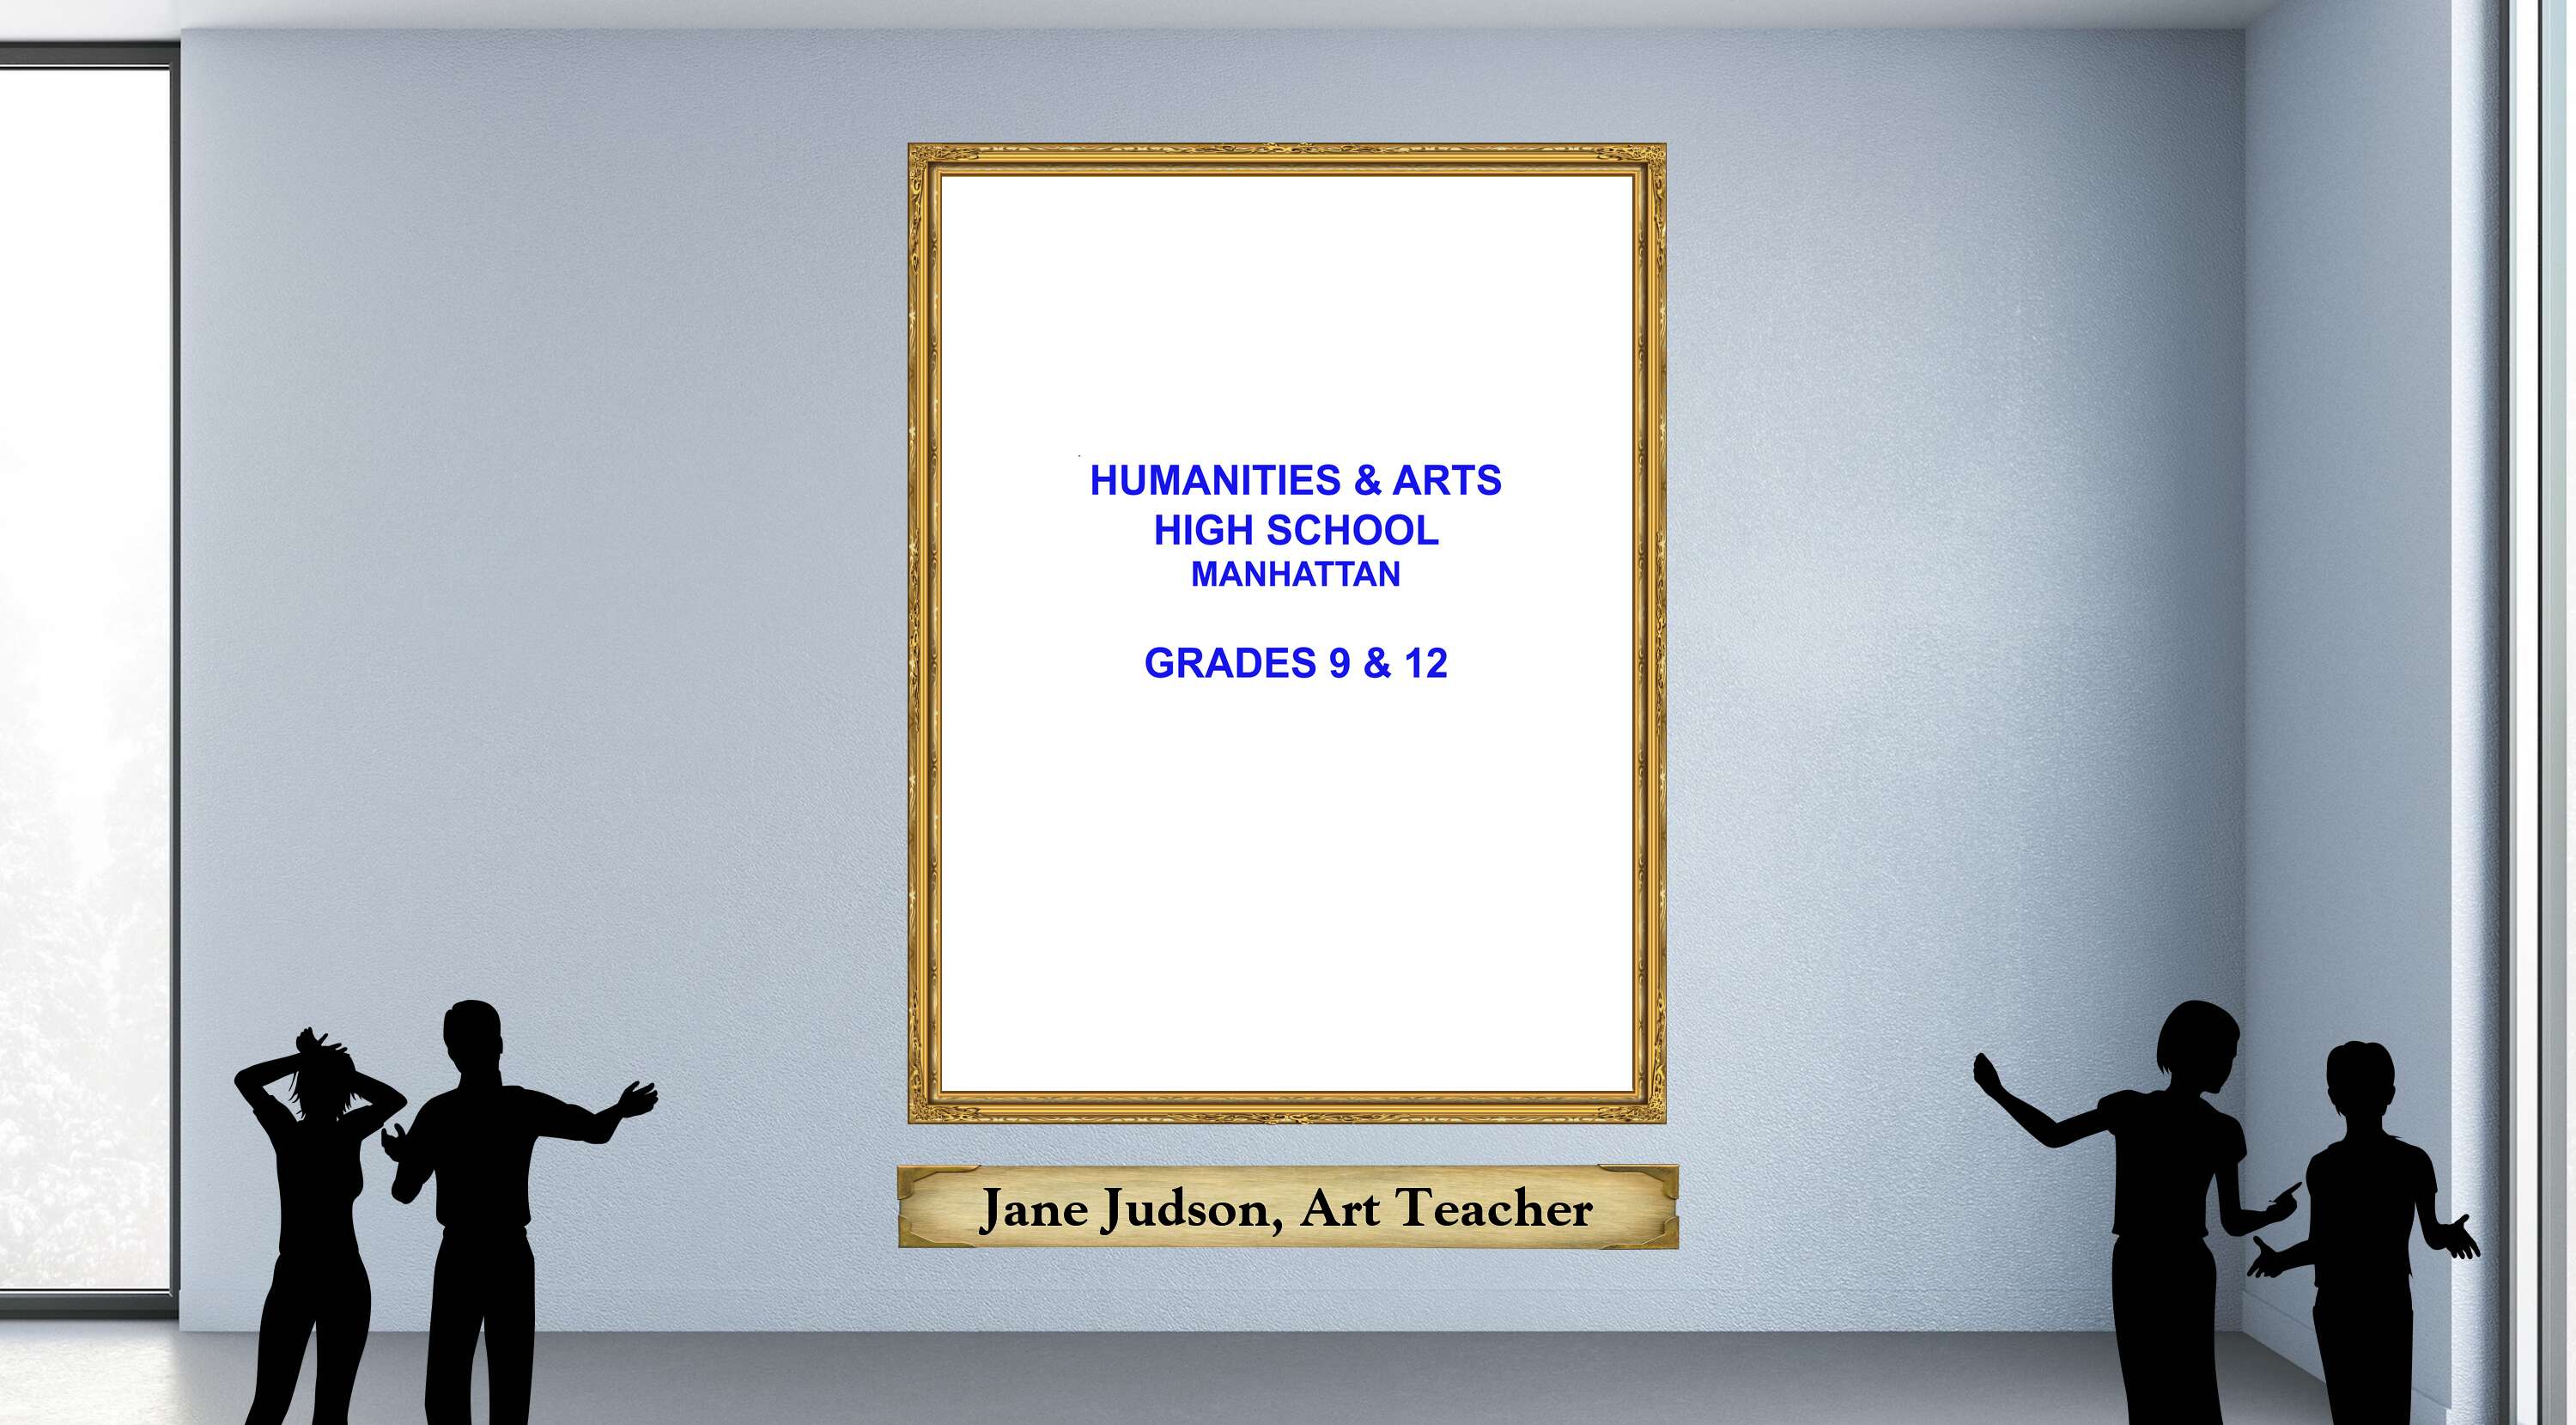 Jane Judson, Art Teacher